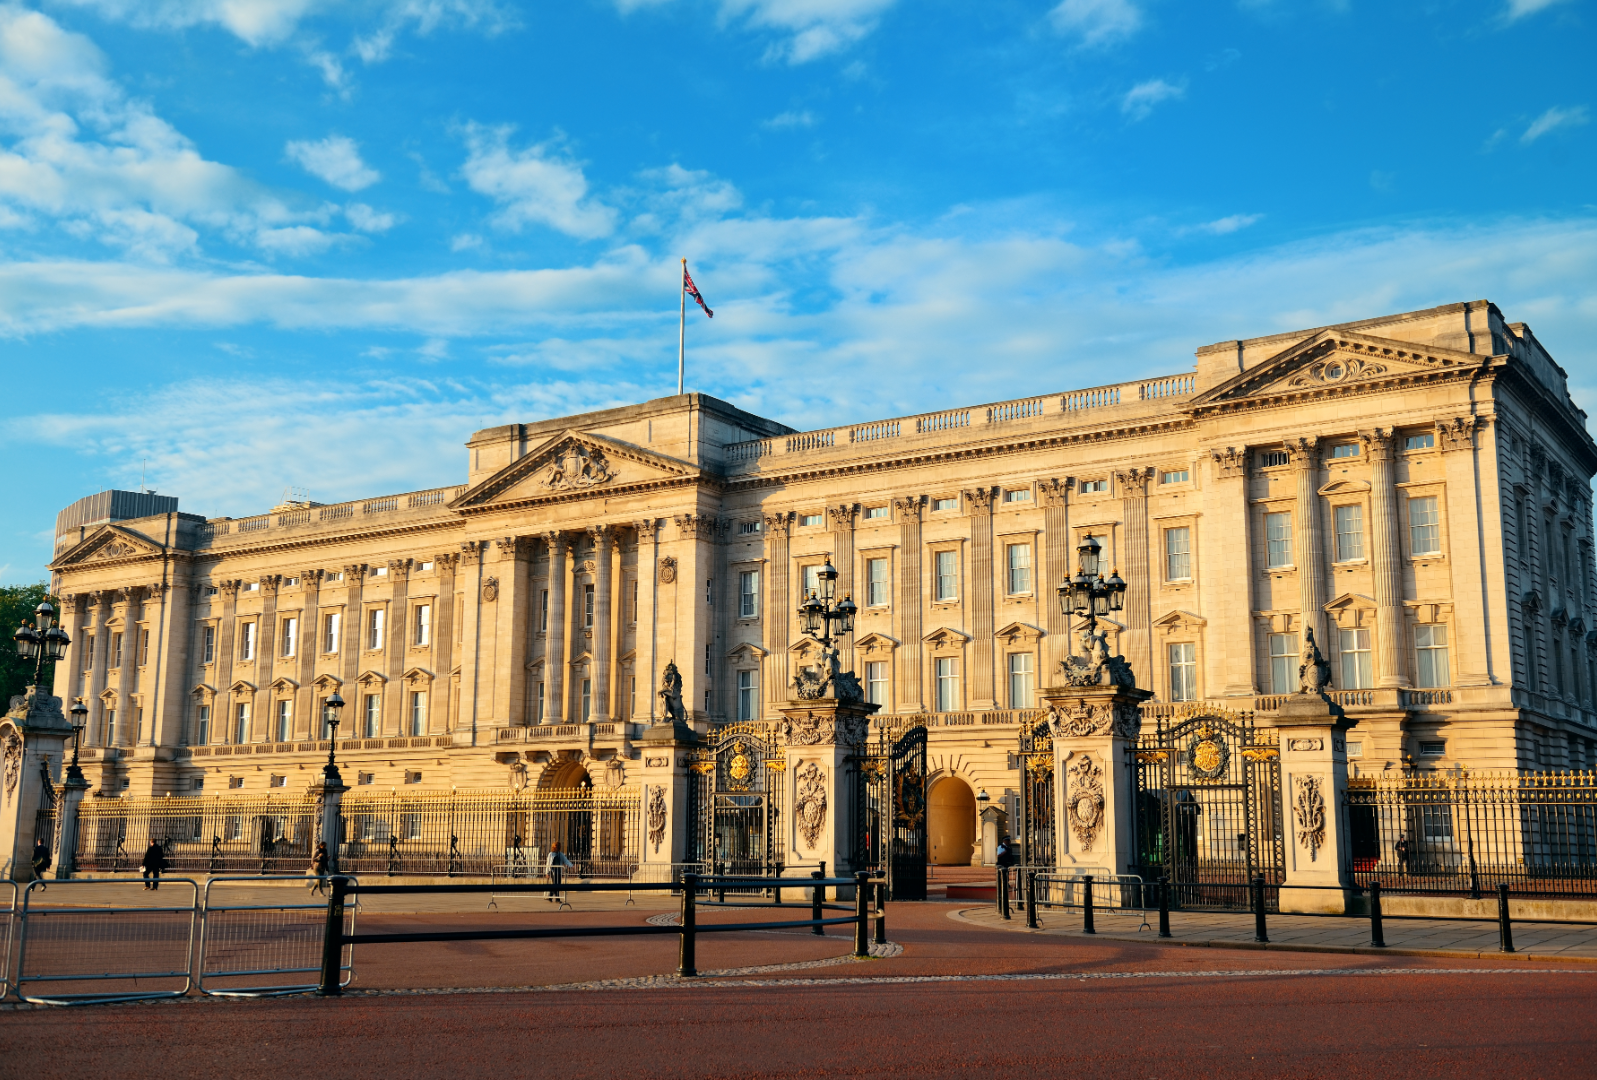 Visit Buckingham Palace in England